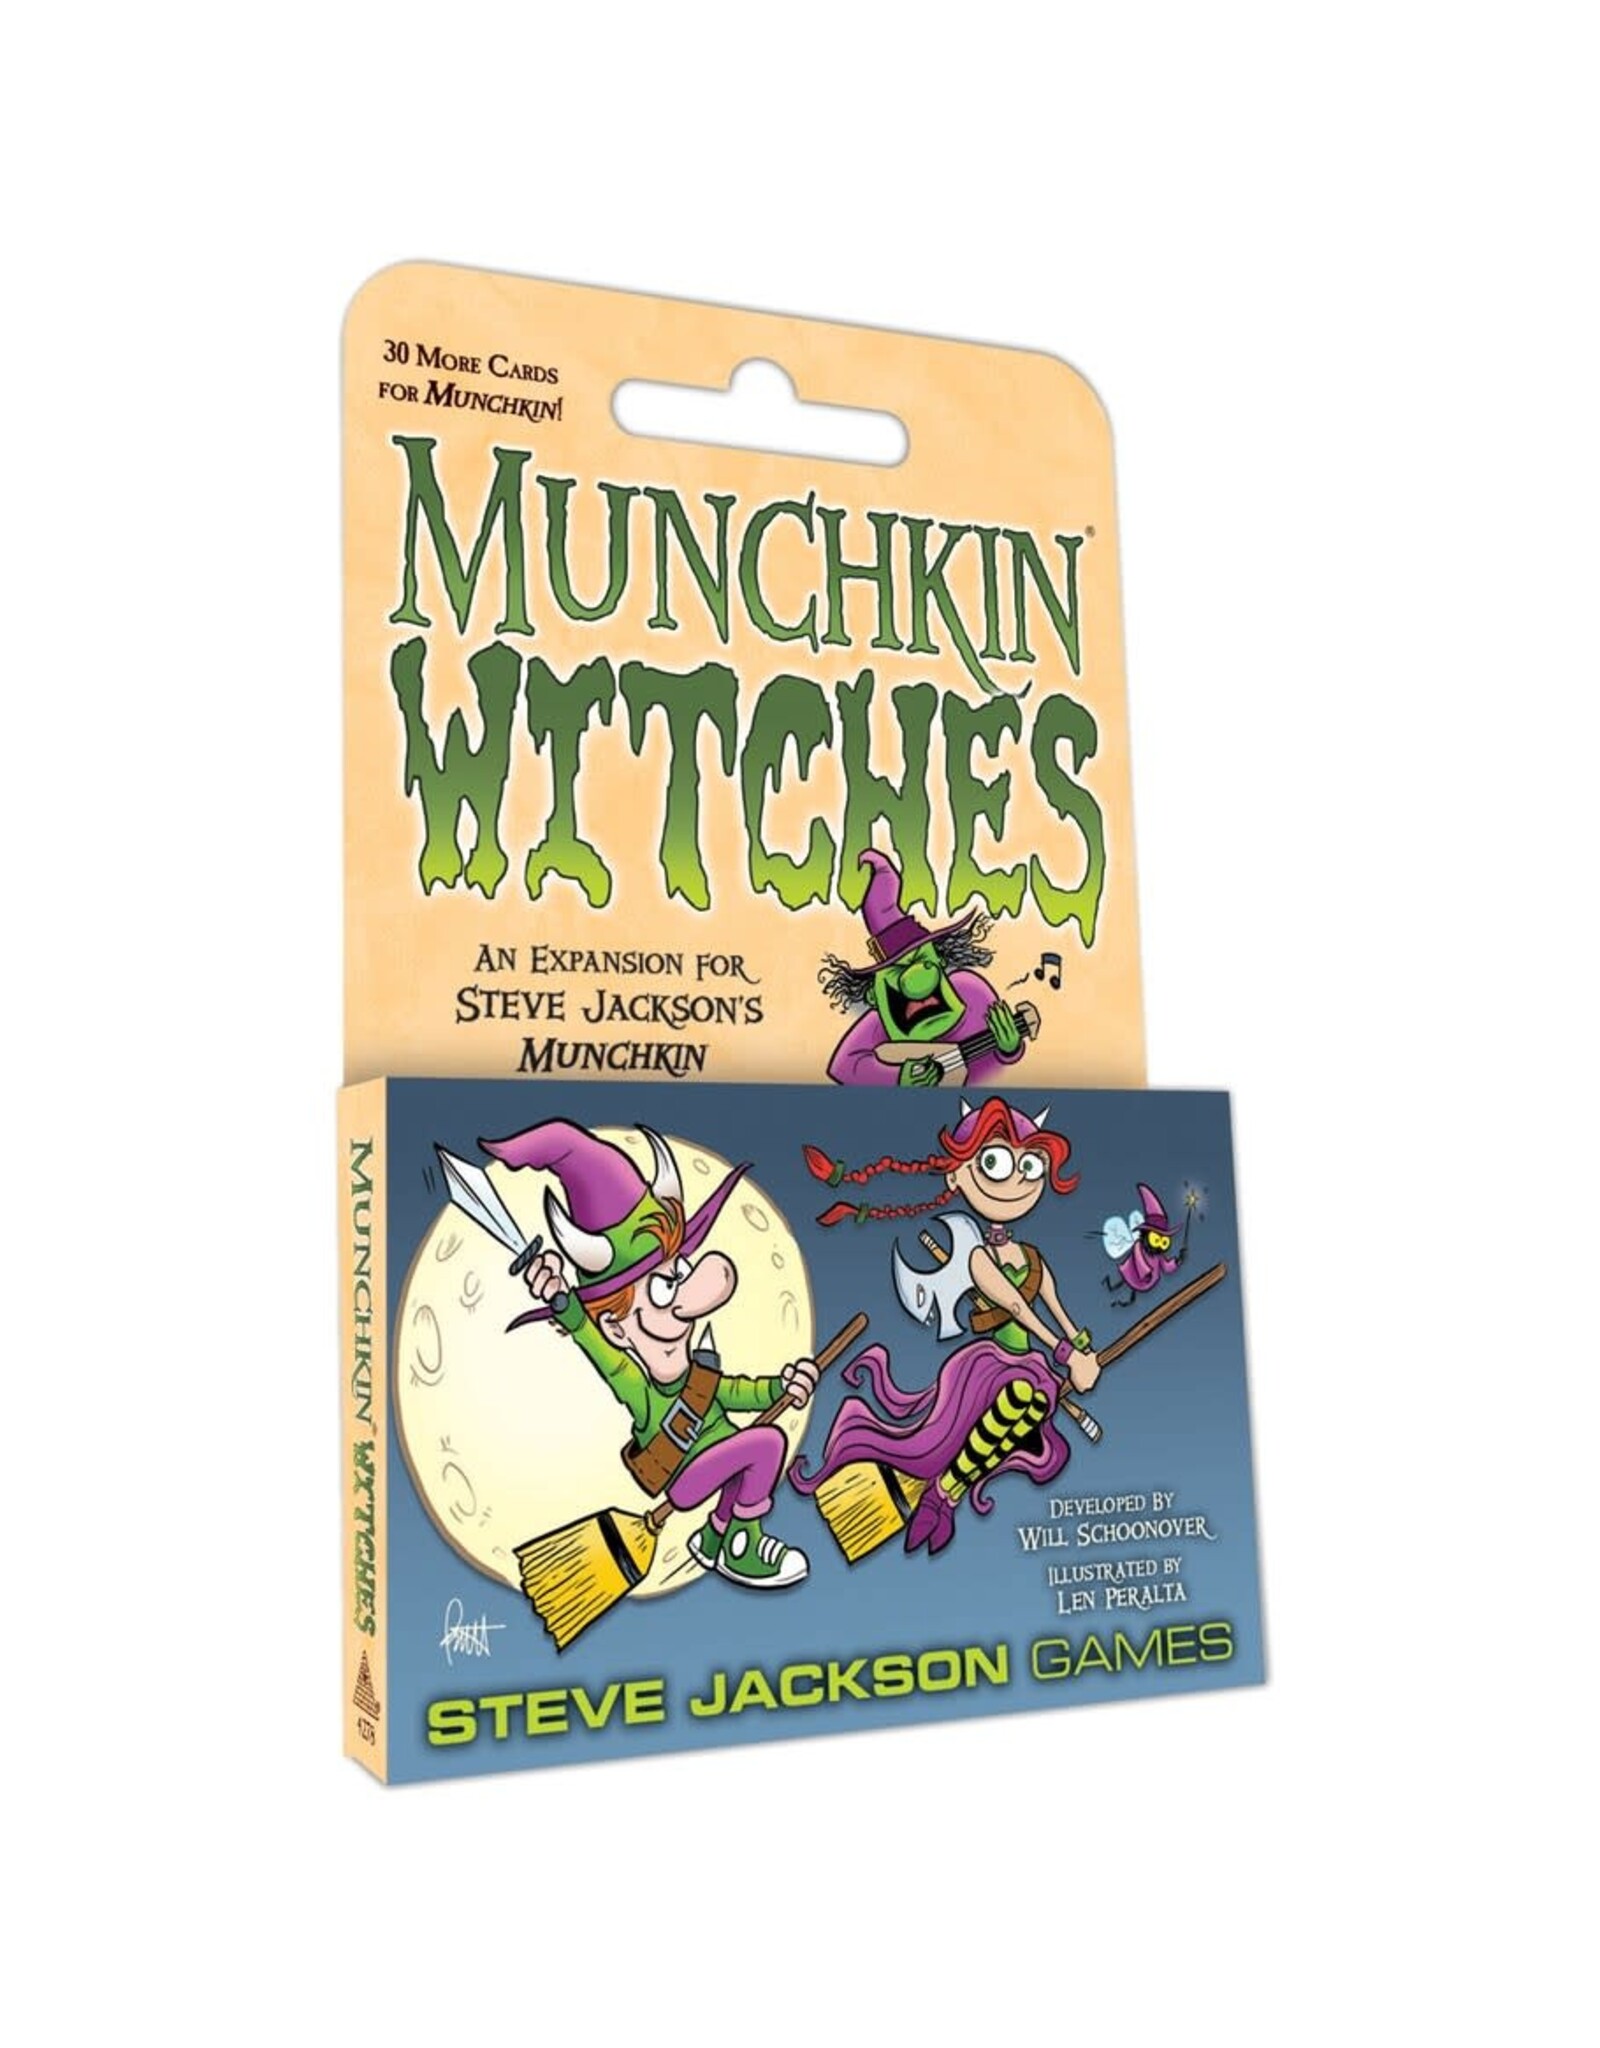 Steve Jackson Games Munchkin Witches